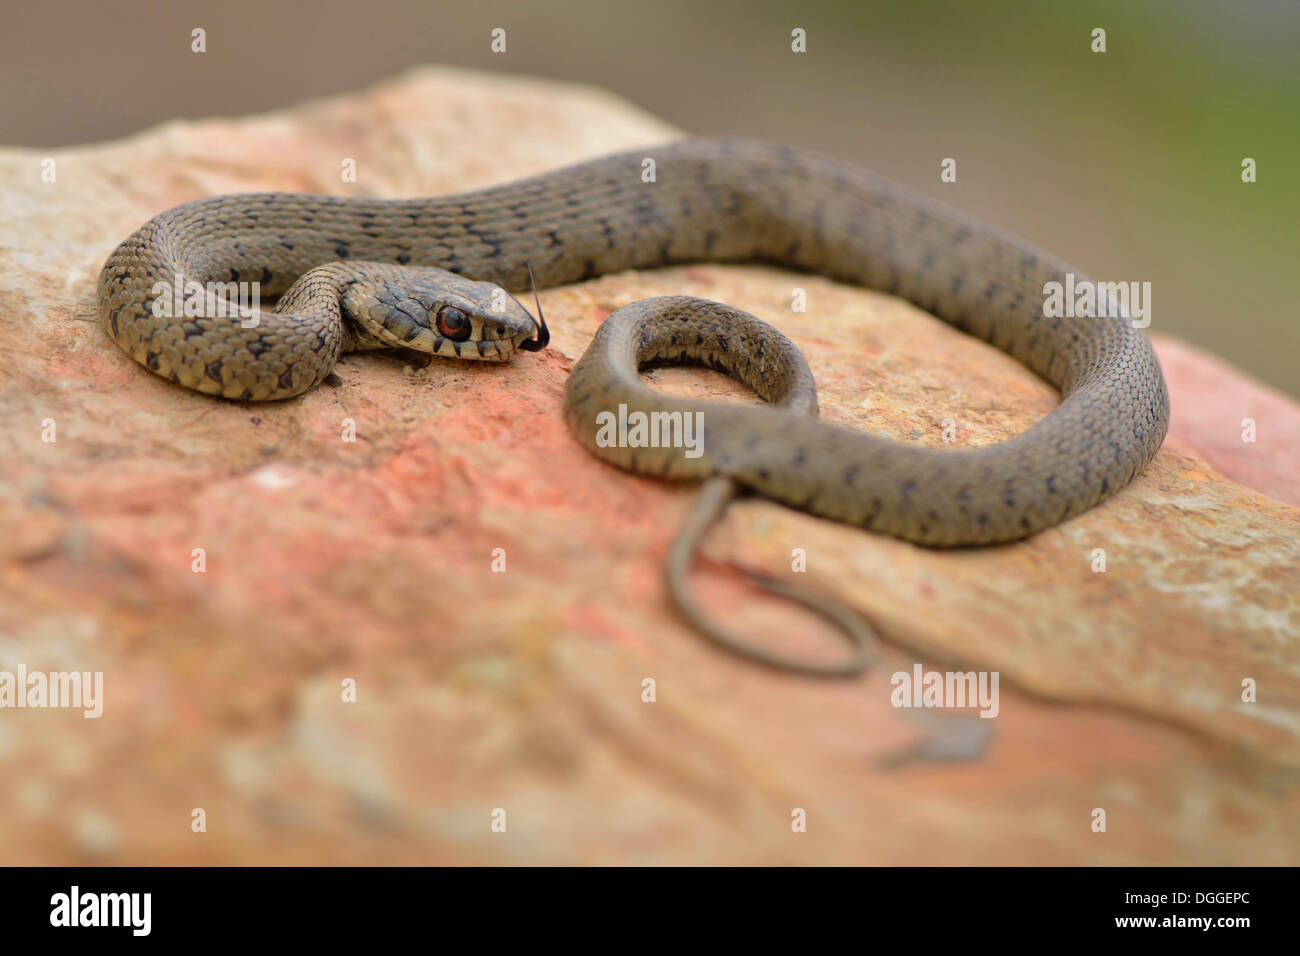 https://c8.alamy.com/comp/DGGEPC/iberian-grass-snake-natrix-natrix-astreptophora-darting-its-tongue-DGGEPC.jpg